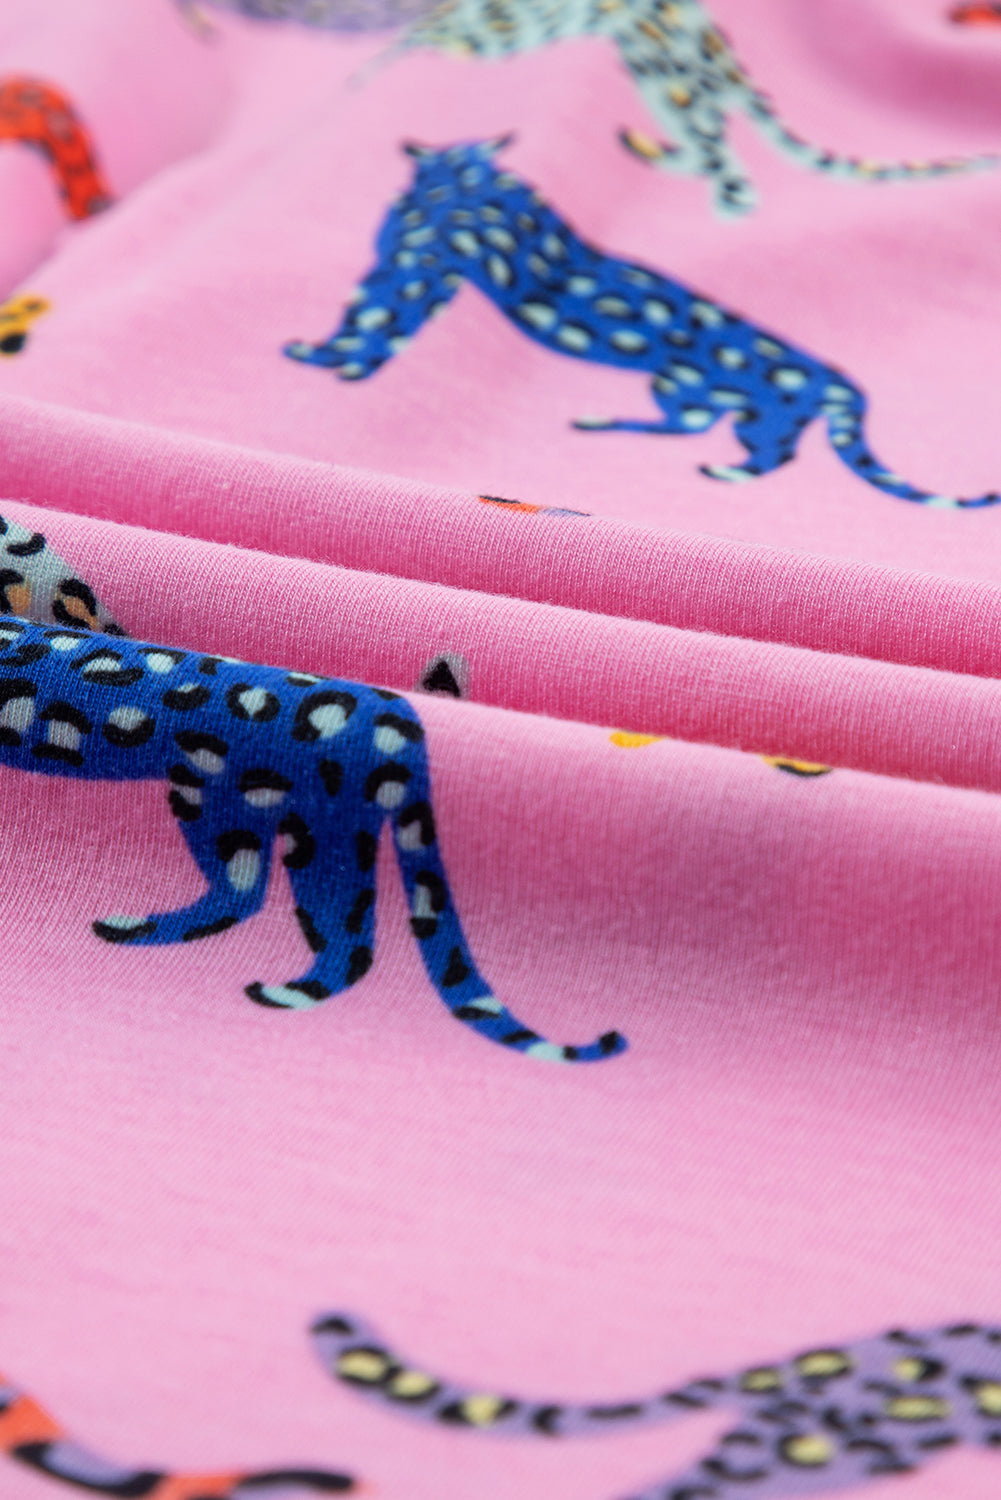 Pink Cheetah Print Shirt and Pants Pajama Set